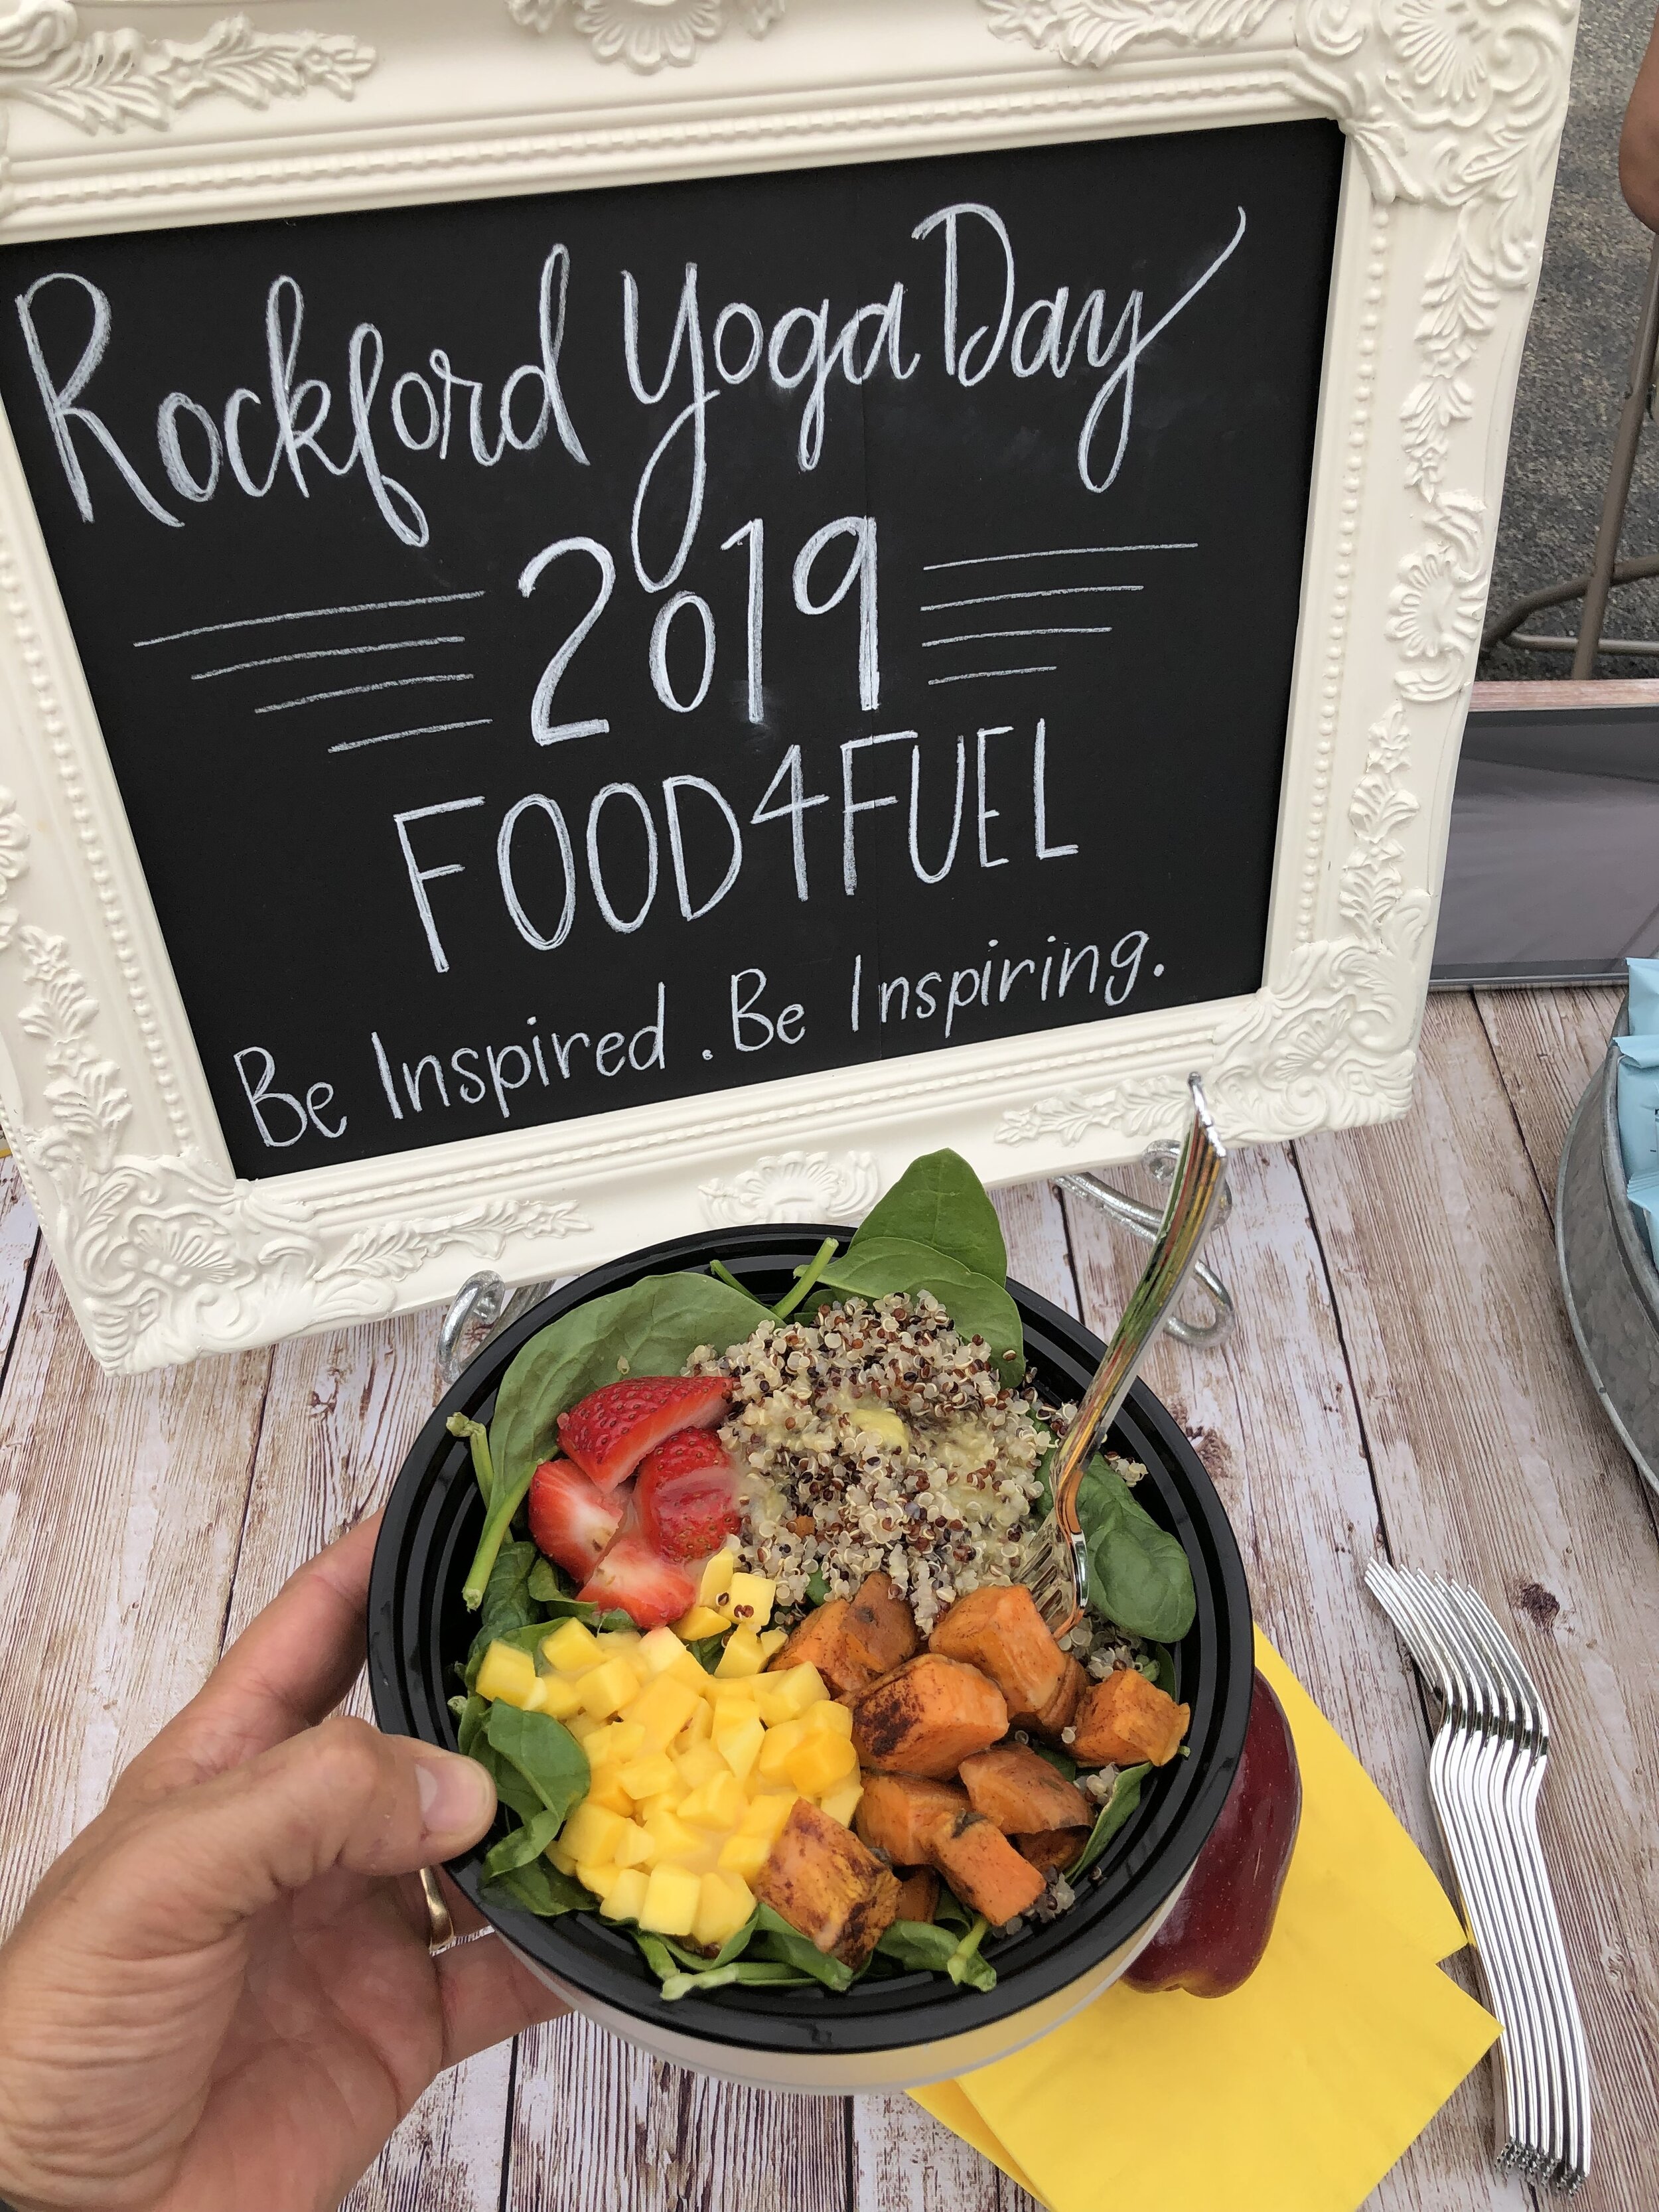 Rockford Yoga Day Food 4 Fuel Keri Knutson Hoyt Yoga Instructor.JPG